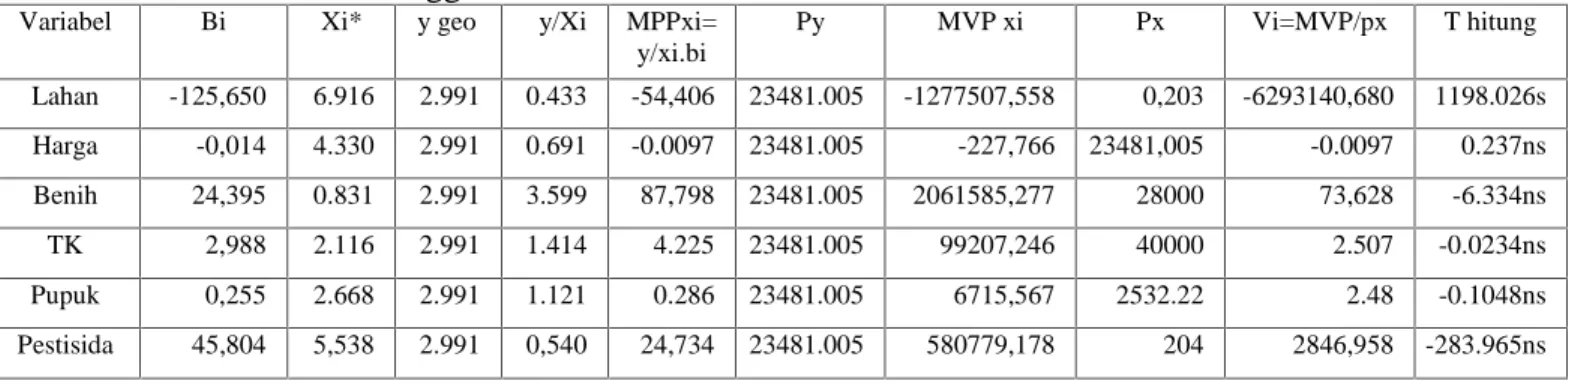 Tabel 5 Analisis Efisiensi Penggunaan Faktor Produksi Variabel Bi Xi* y geo y/Xi MPPxi=